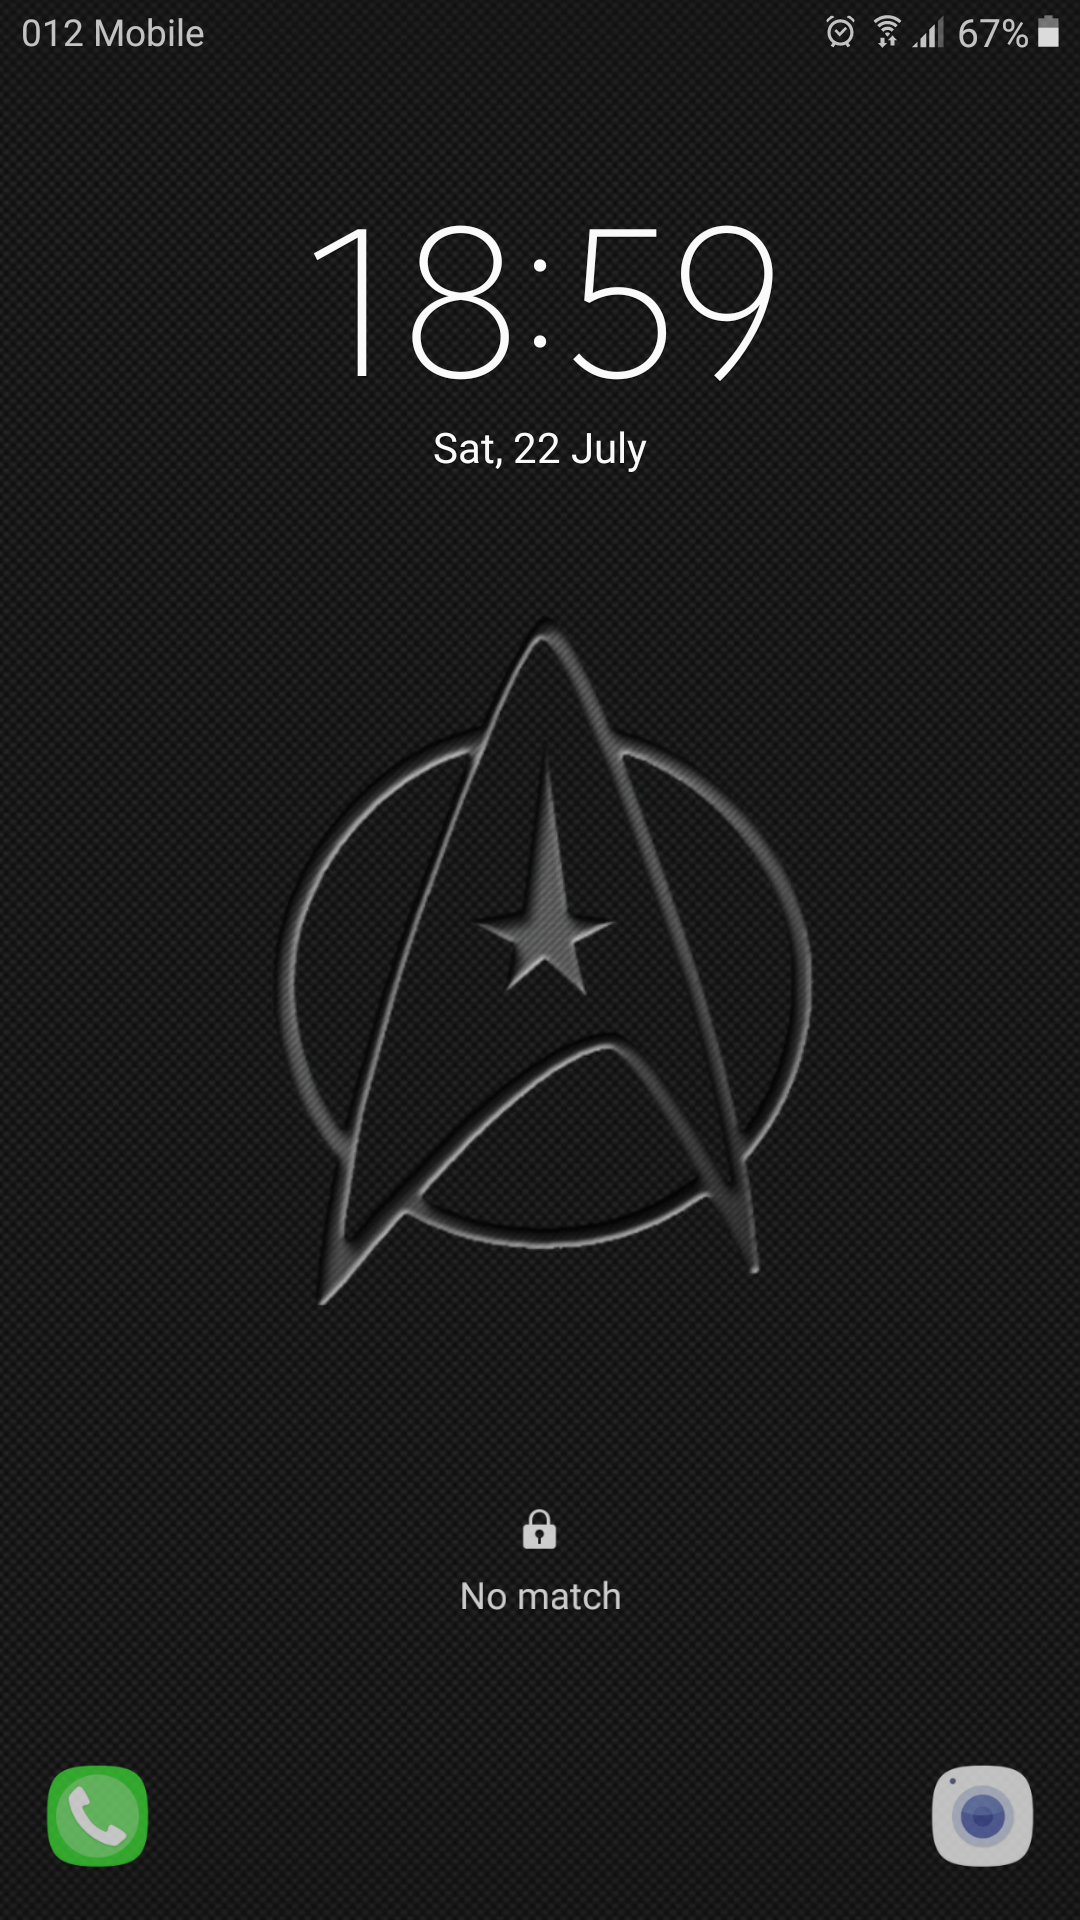 Love this Star Trek wallpaper for my phone